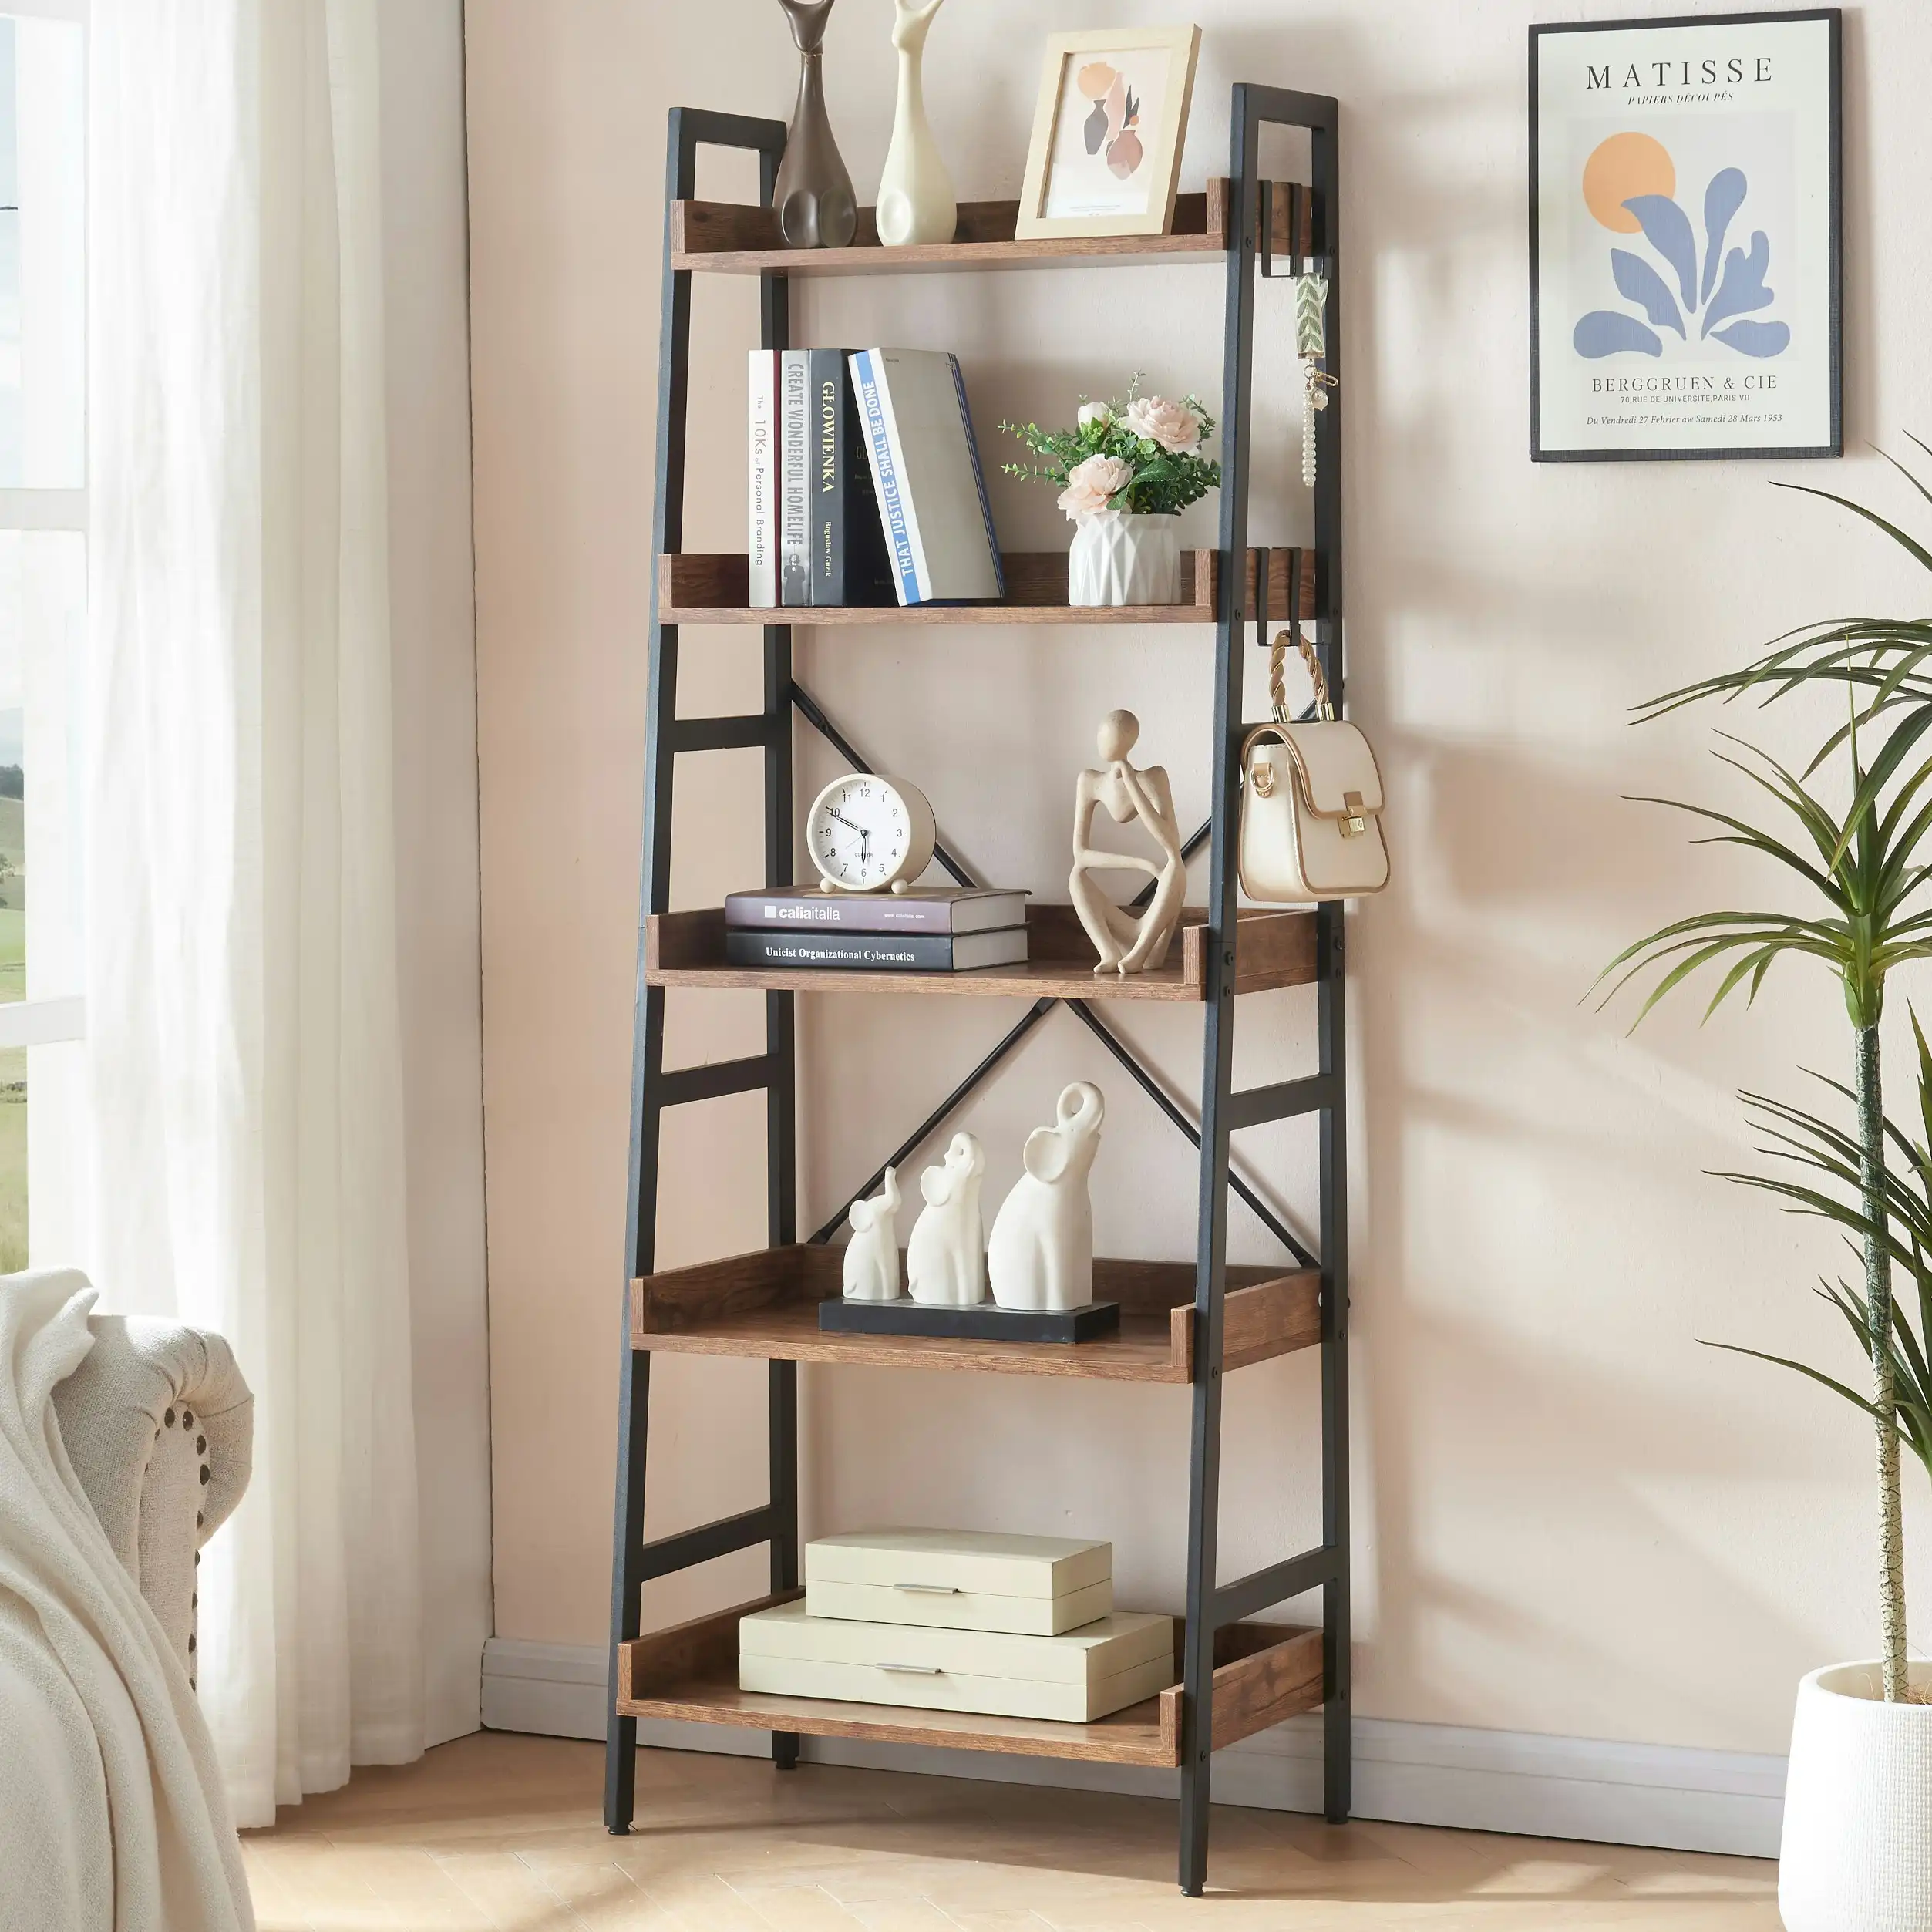 HLIVING 5 Tier Ladder Bookshelf with 4 Hooks, Industrial Shelf, Freestanding Display Plant Shelves, Rustic Brown